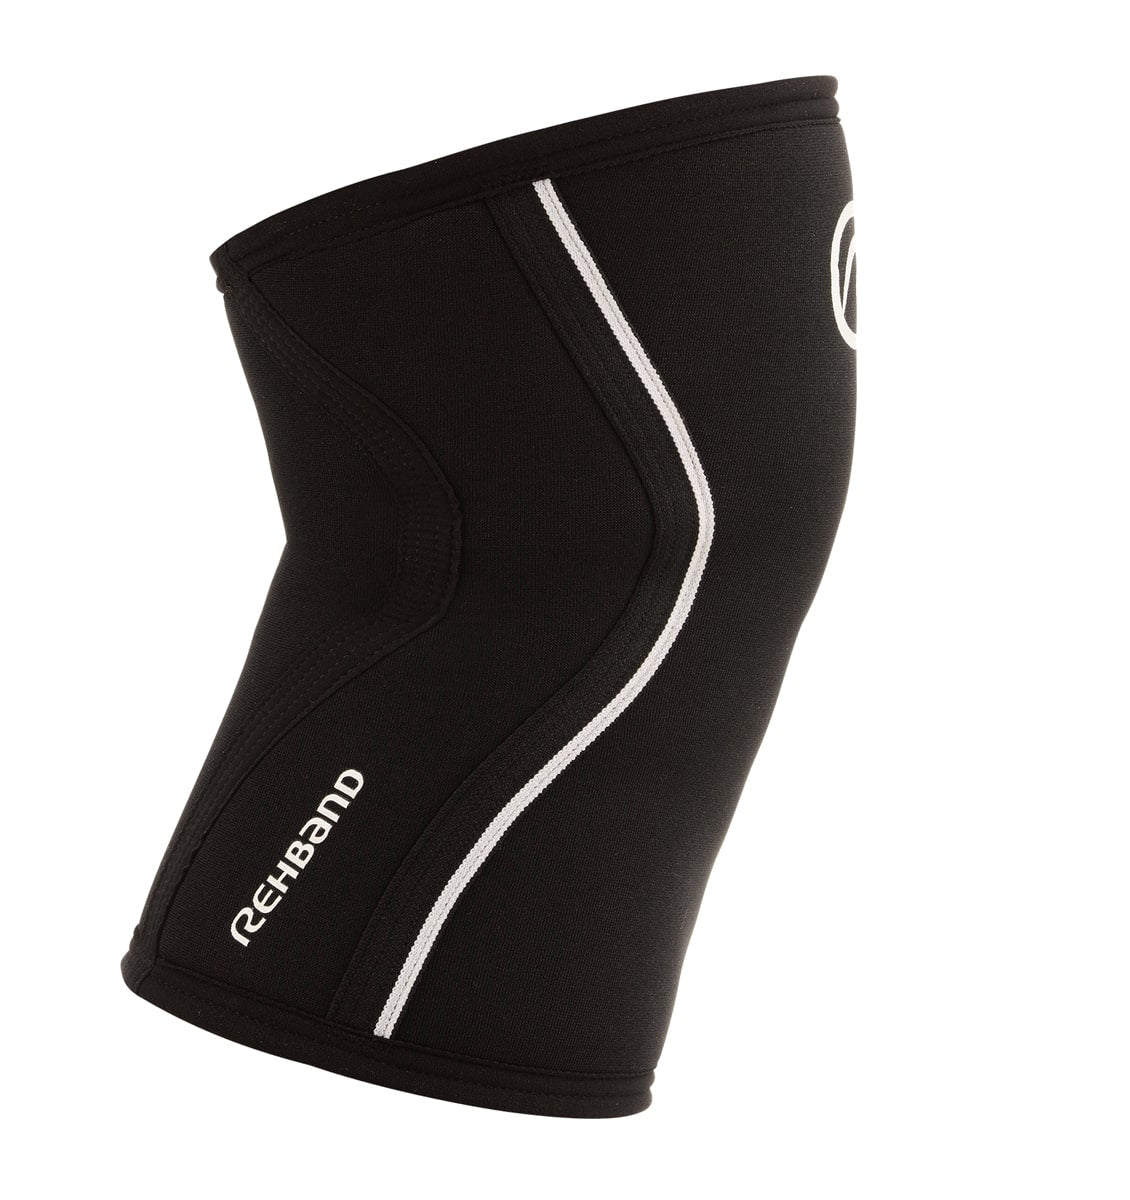 105306-50 - Rehband Rx Knee Sleeve - JUNIOR - Black - 5mm - Side